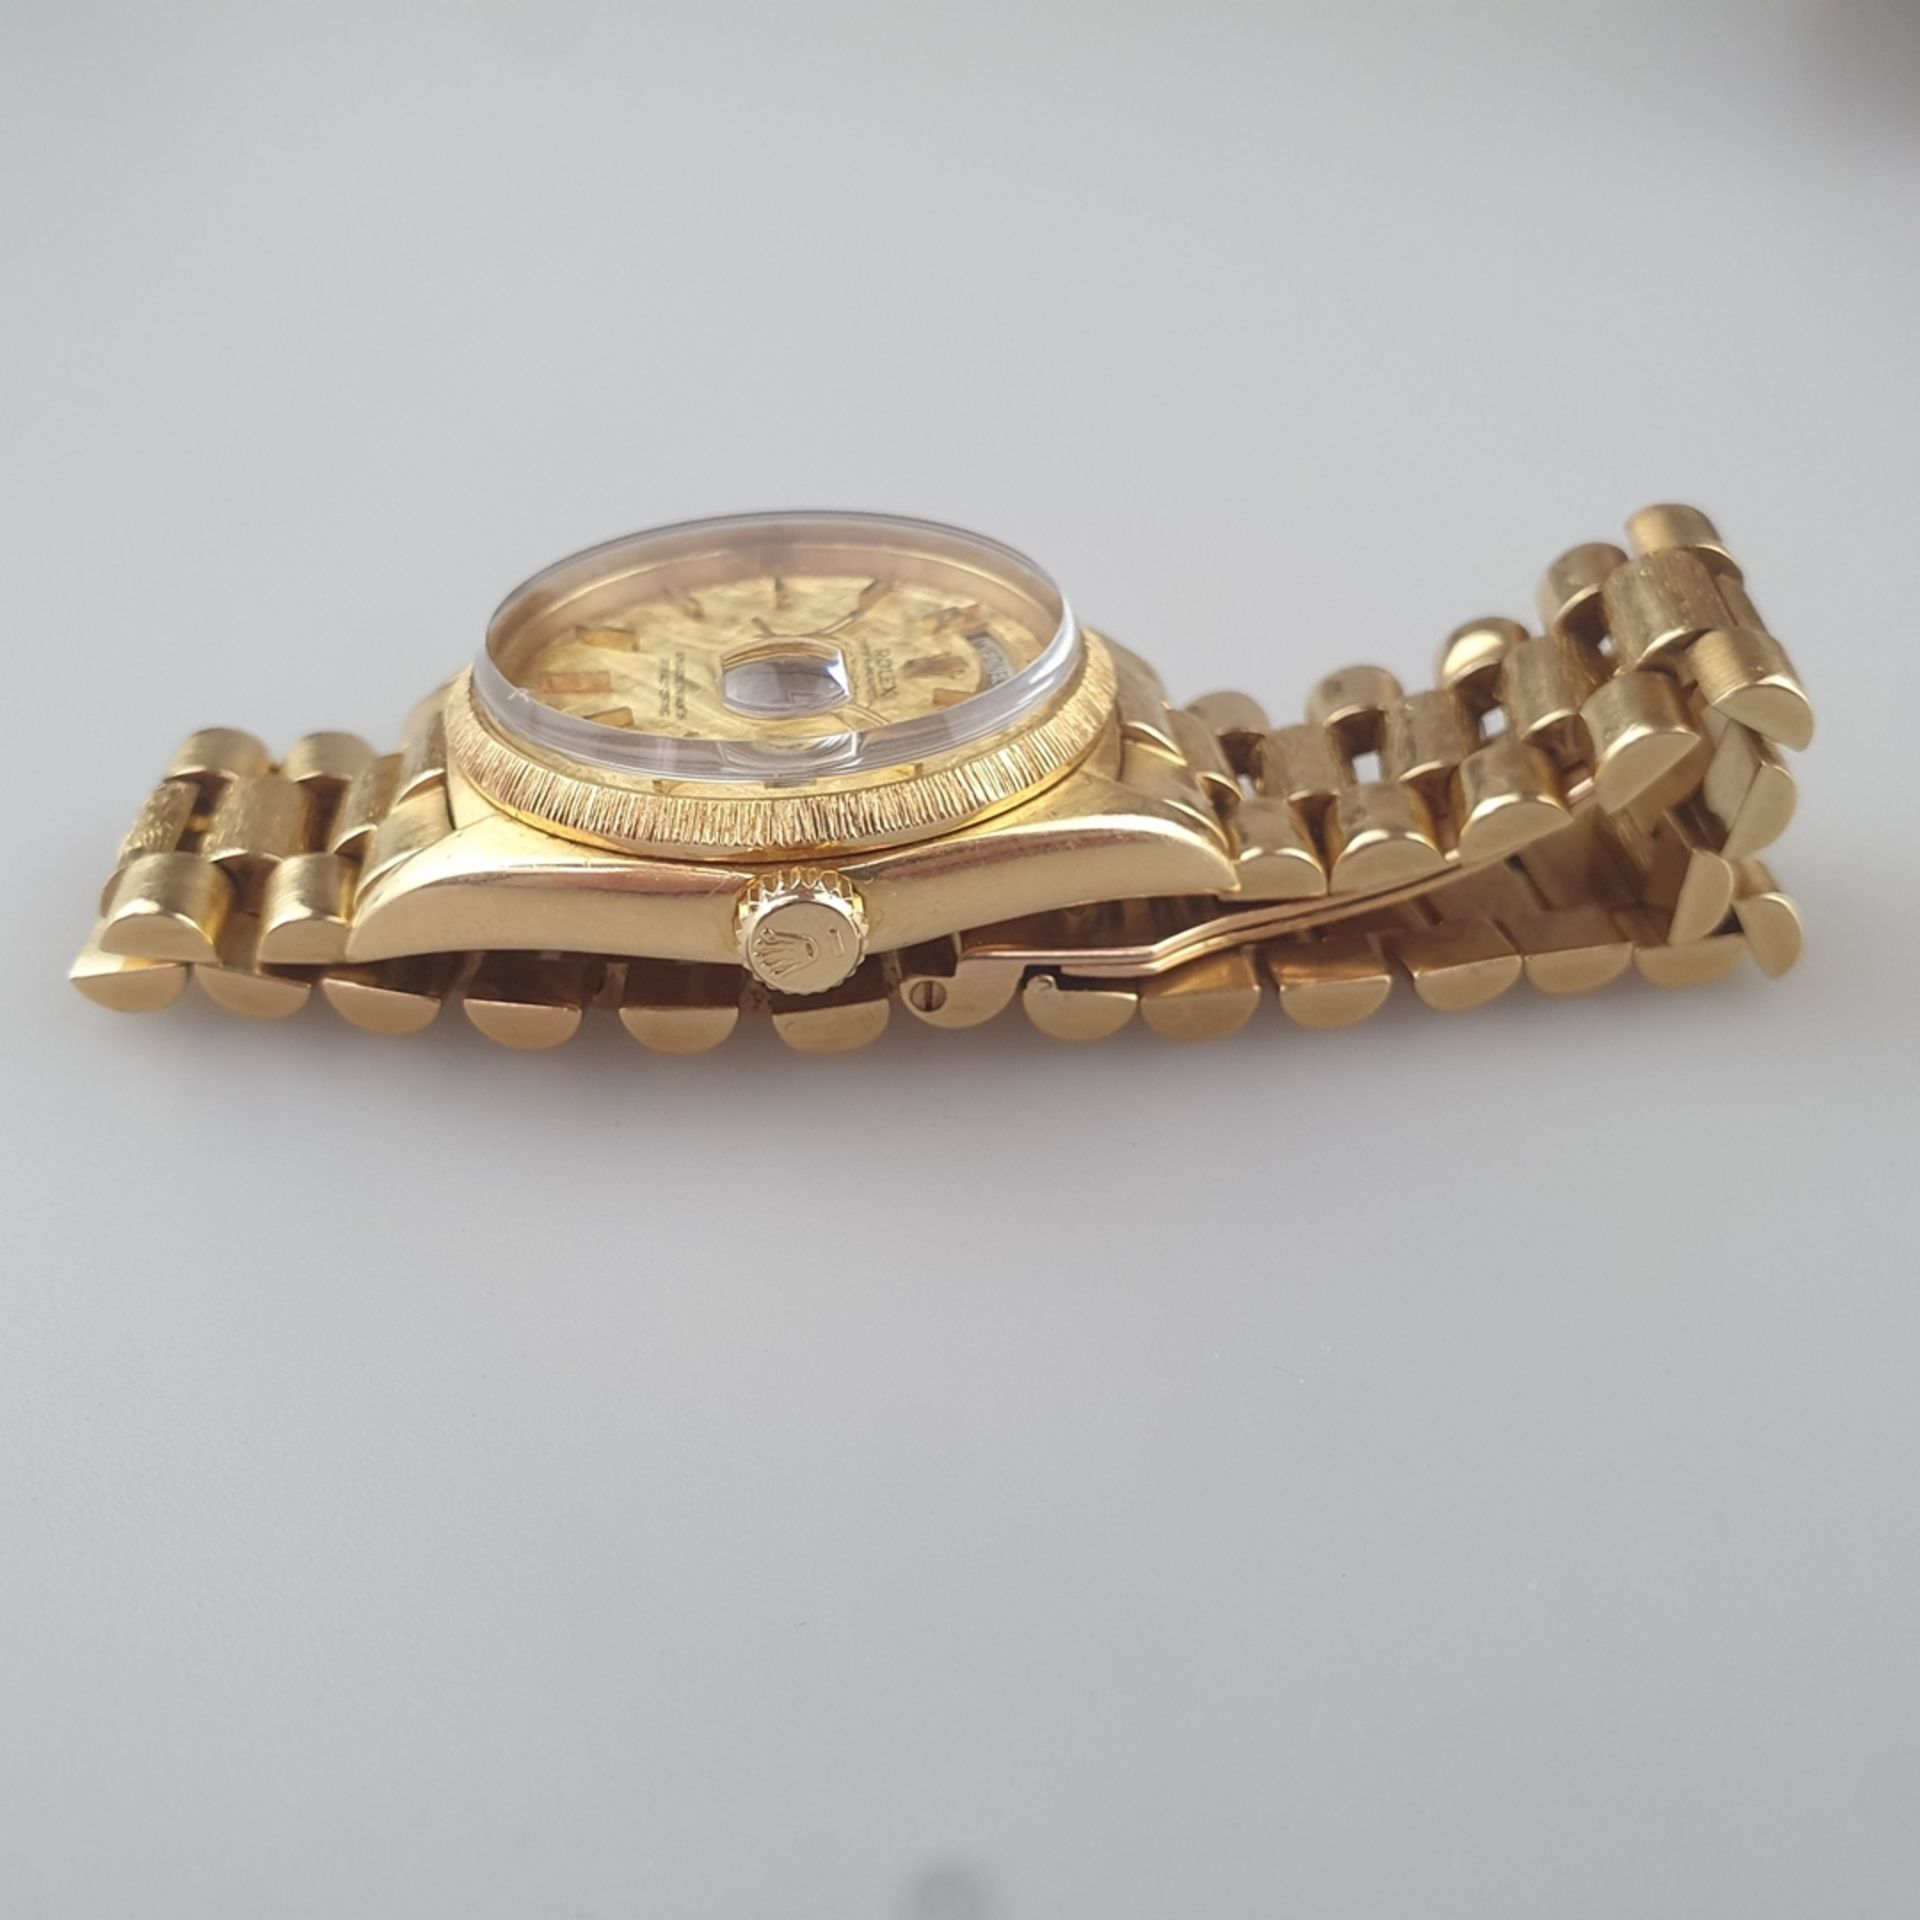 Rolex-Herrenarmbanduhr - "Day-Date", Gehäuse 18K-Gelbgold , 1807 Borke, Automatik, goldfarbenes Zif - Image 3 of 9